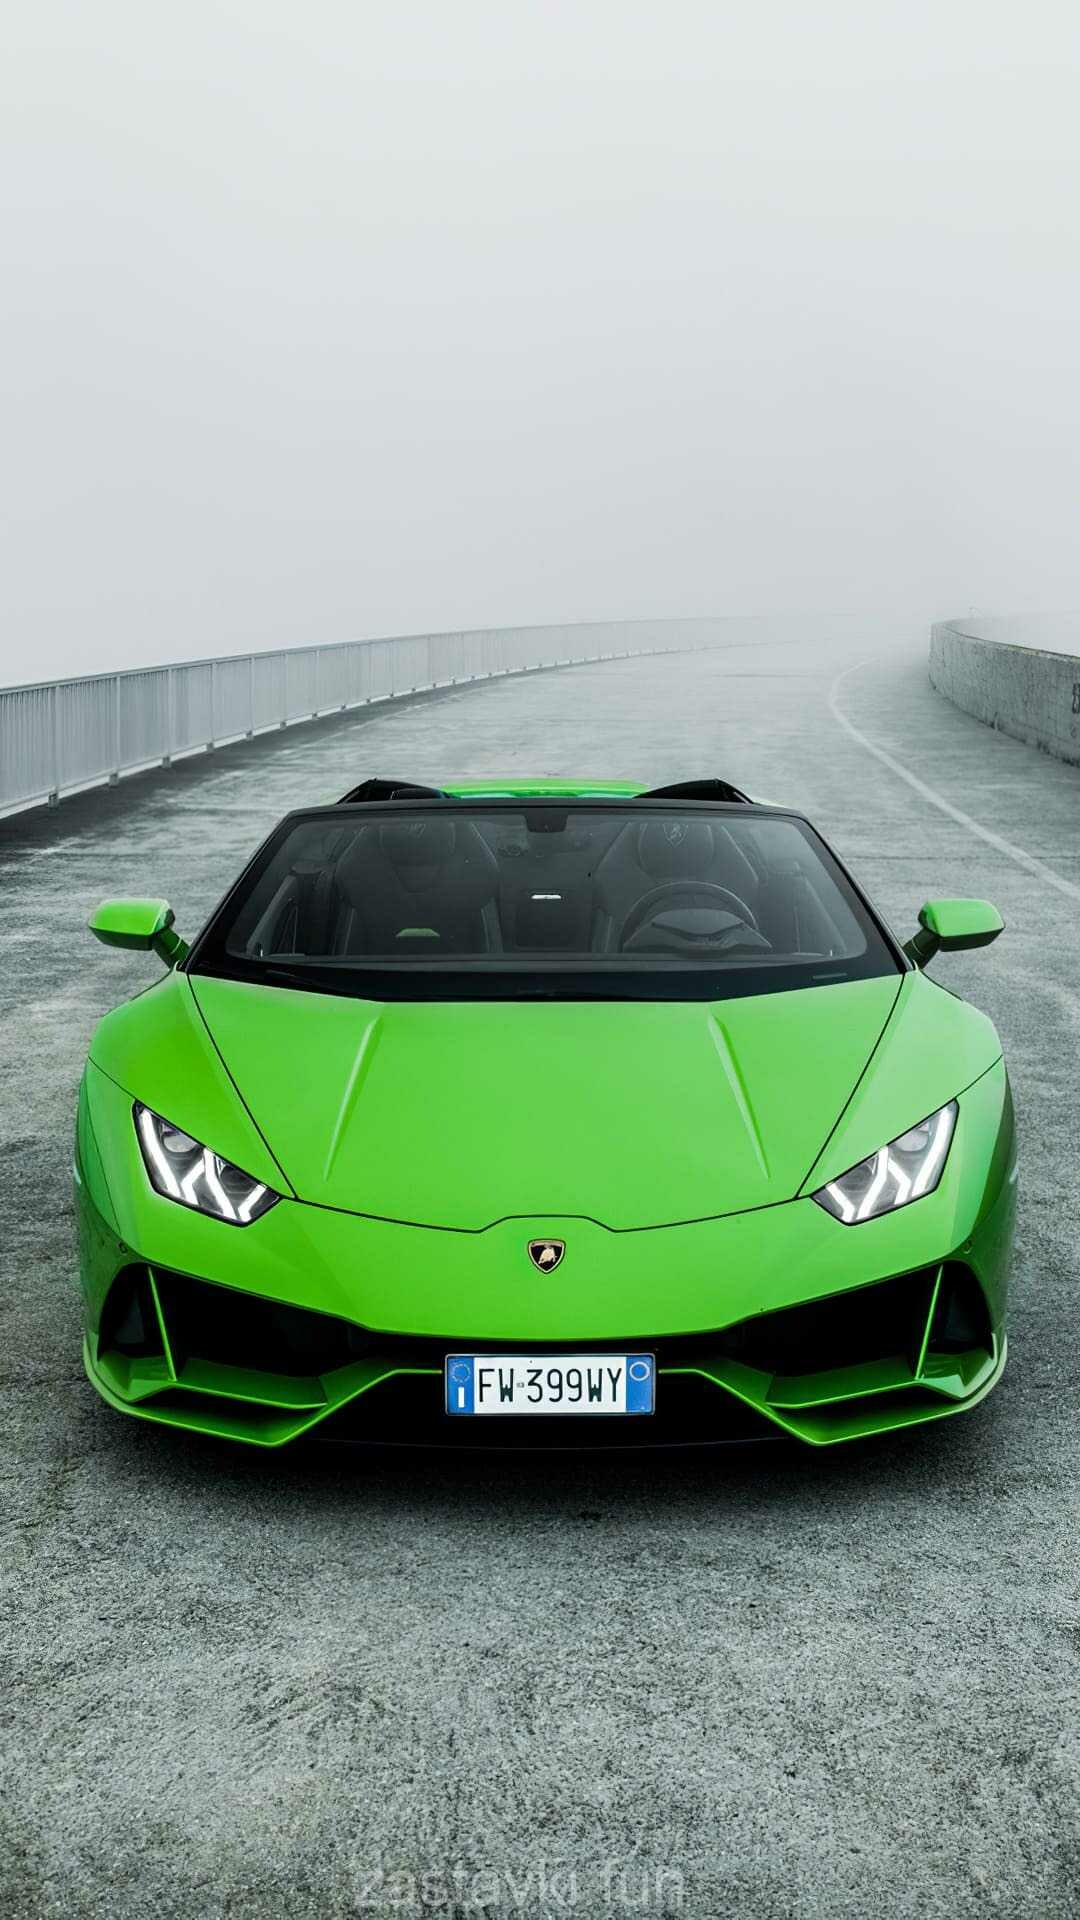 Lamborghini: The company founded in 1963 to compete with Ferrari, Huracan EVO. 1080x1920 Full HD Wallpaper.